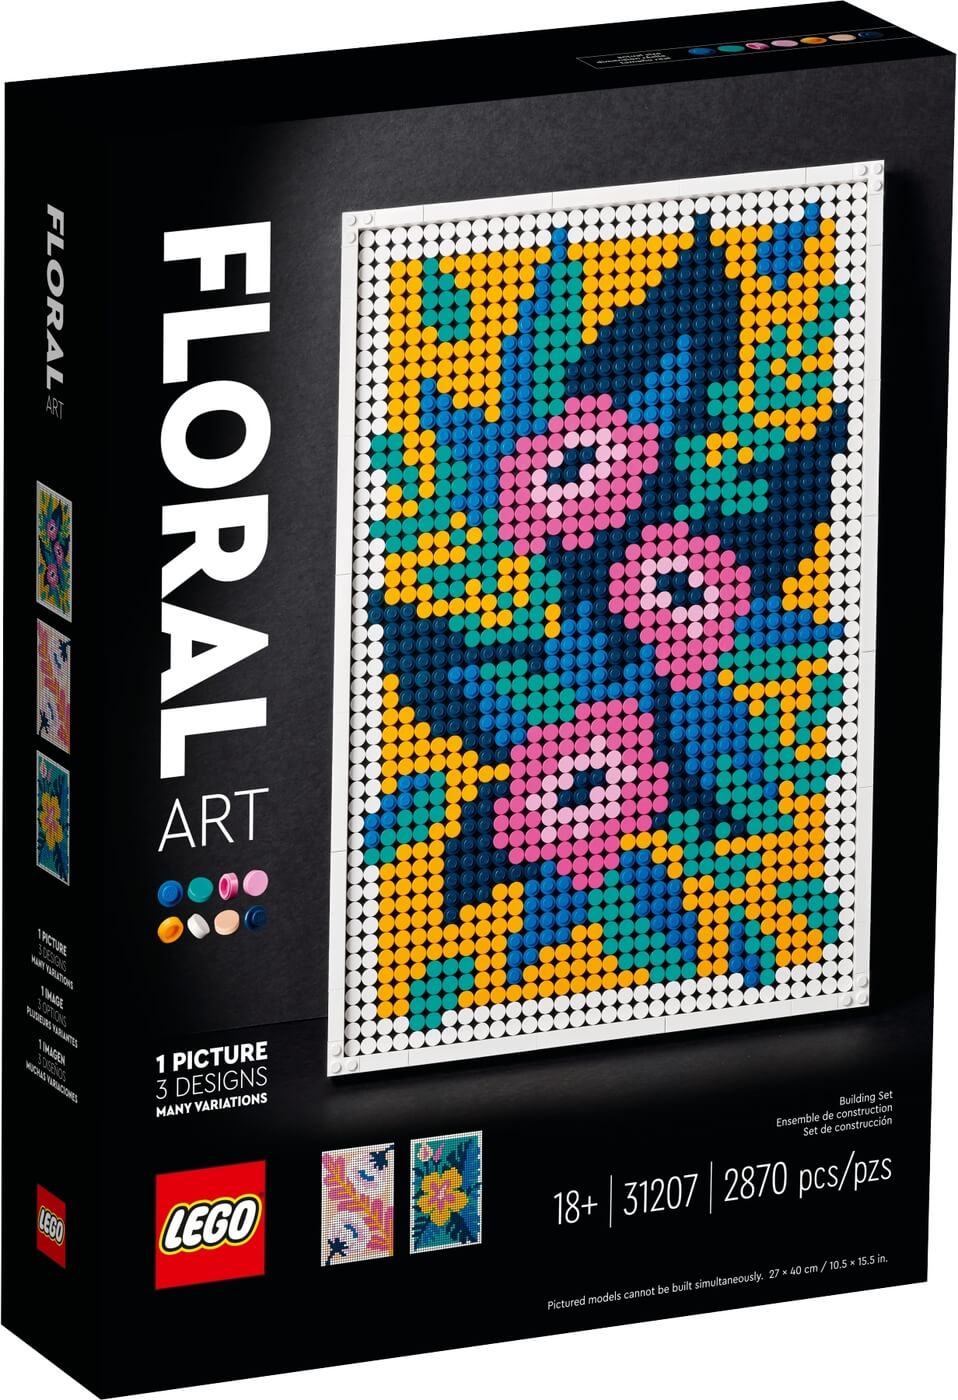 Arte Floral ( Lego 31207 ) imagen f